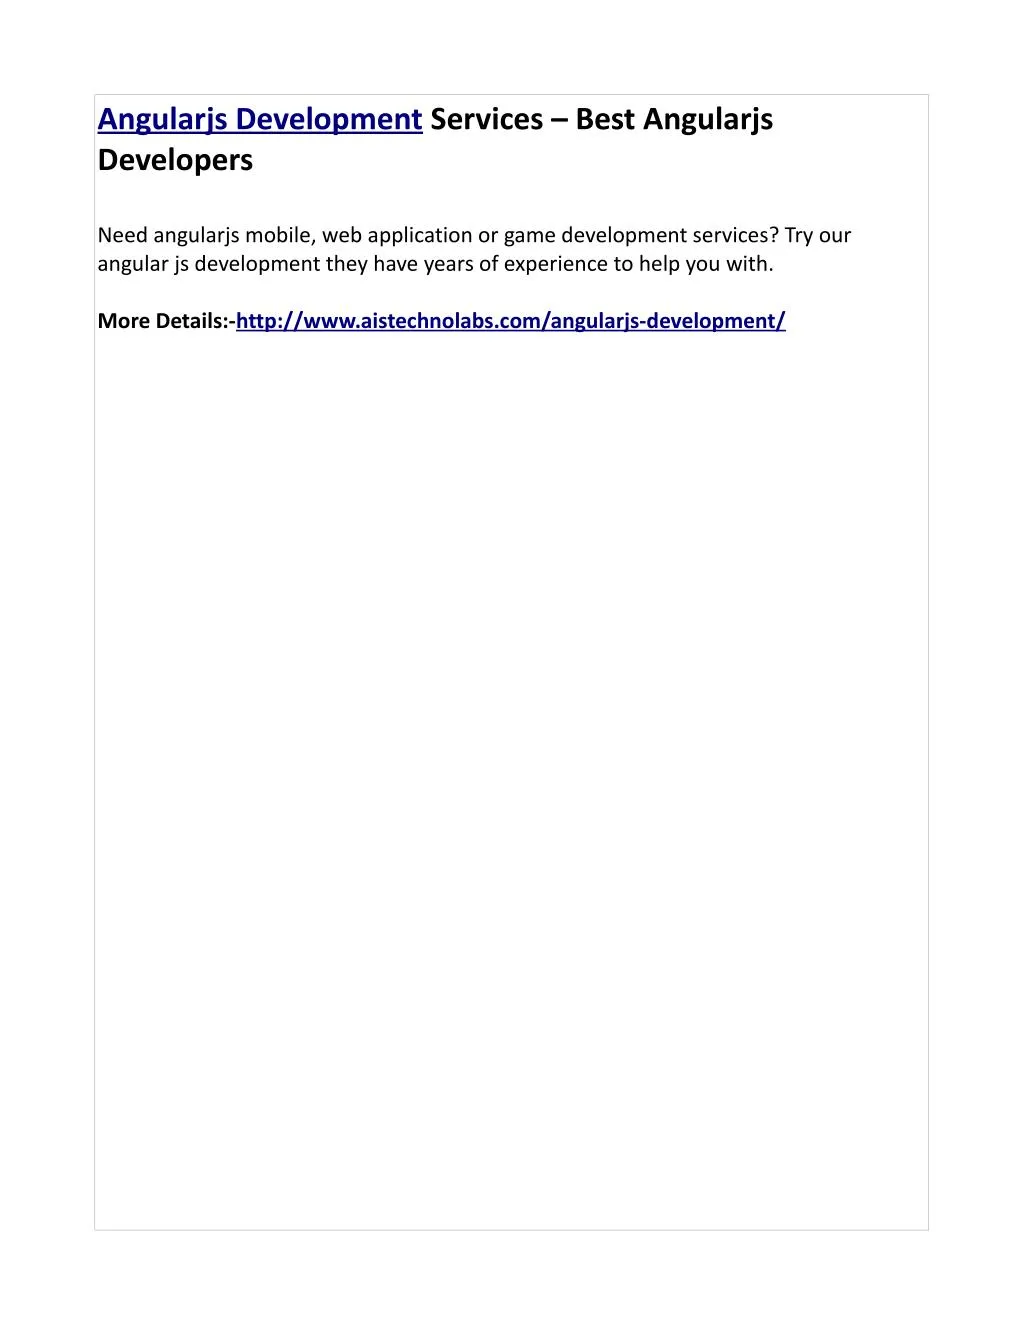 angularjs development services best angularjs